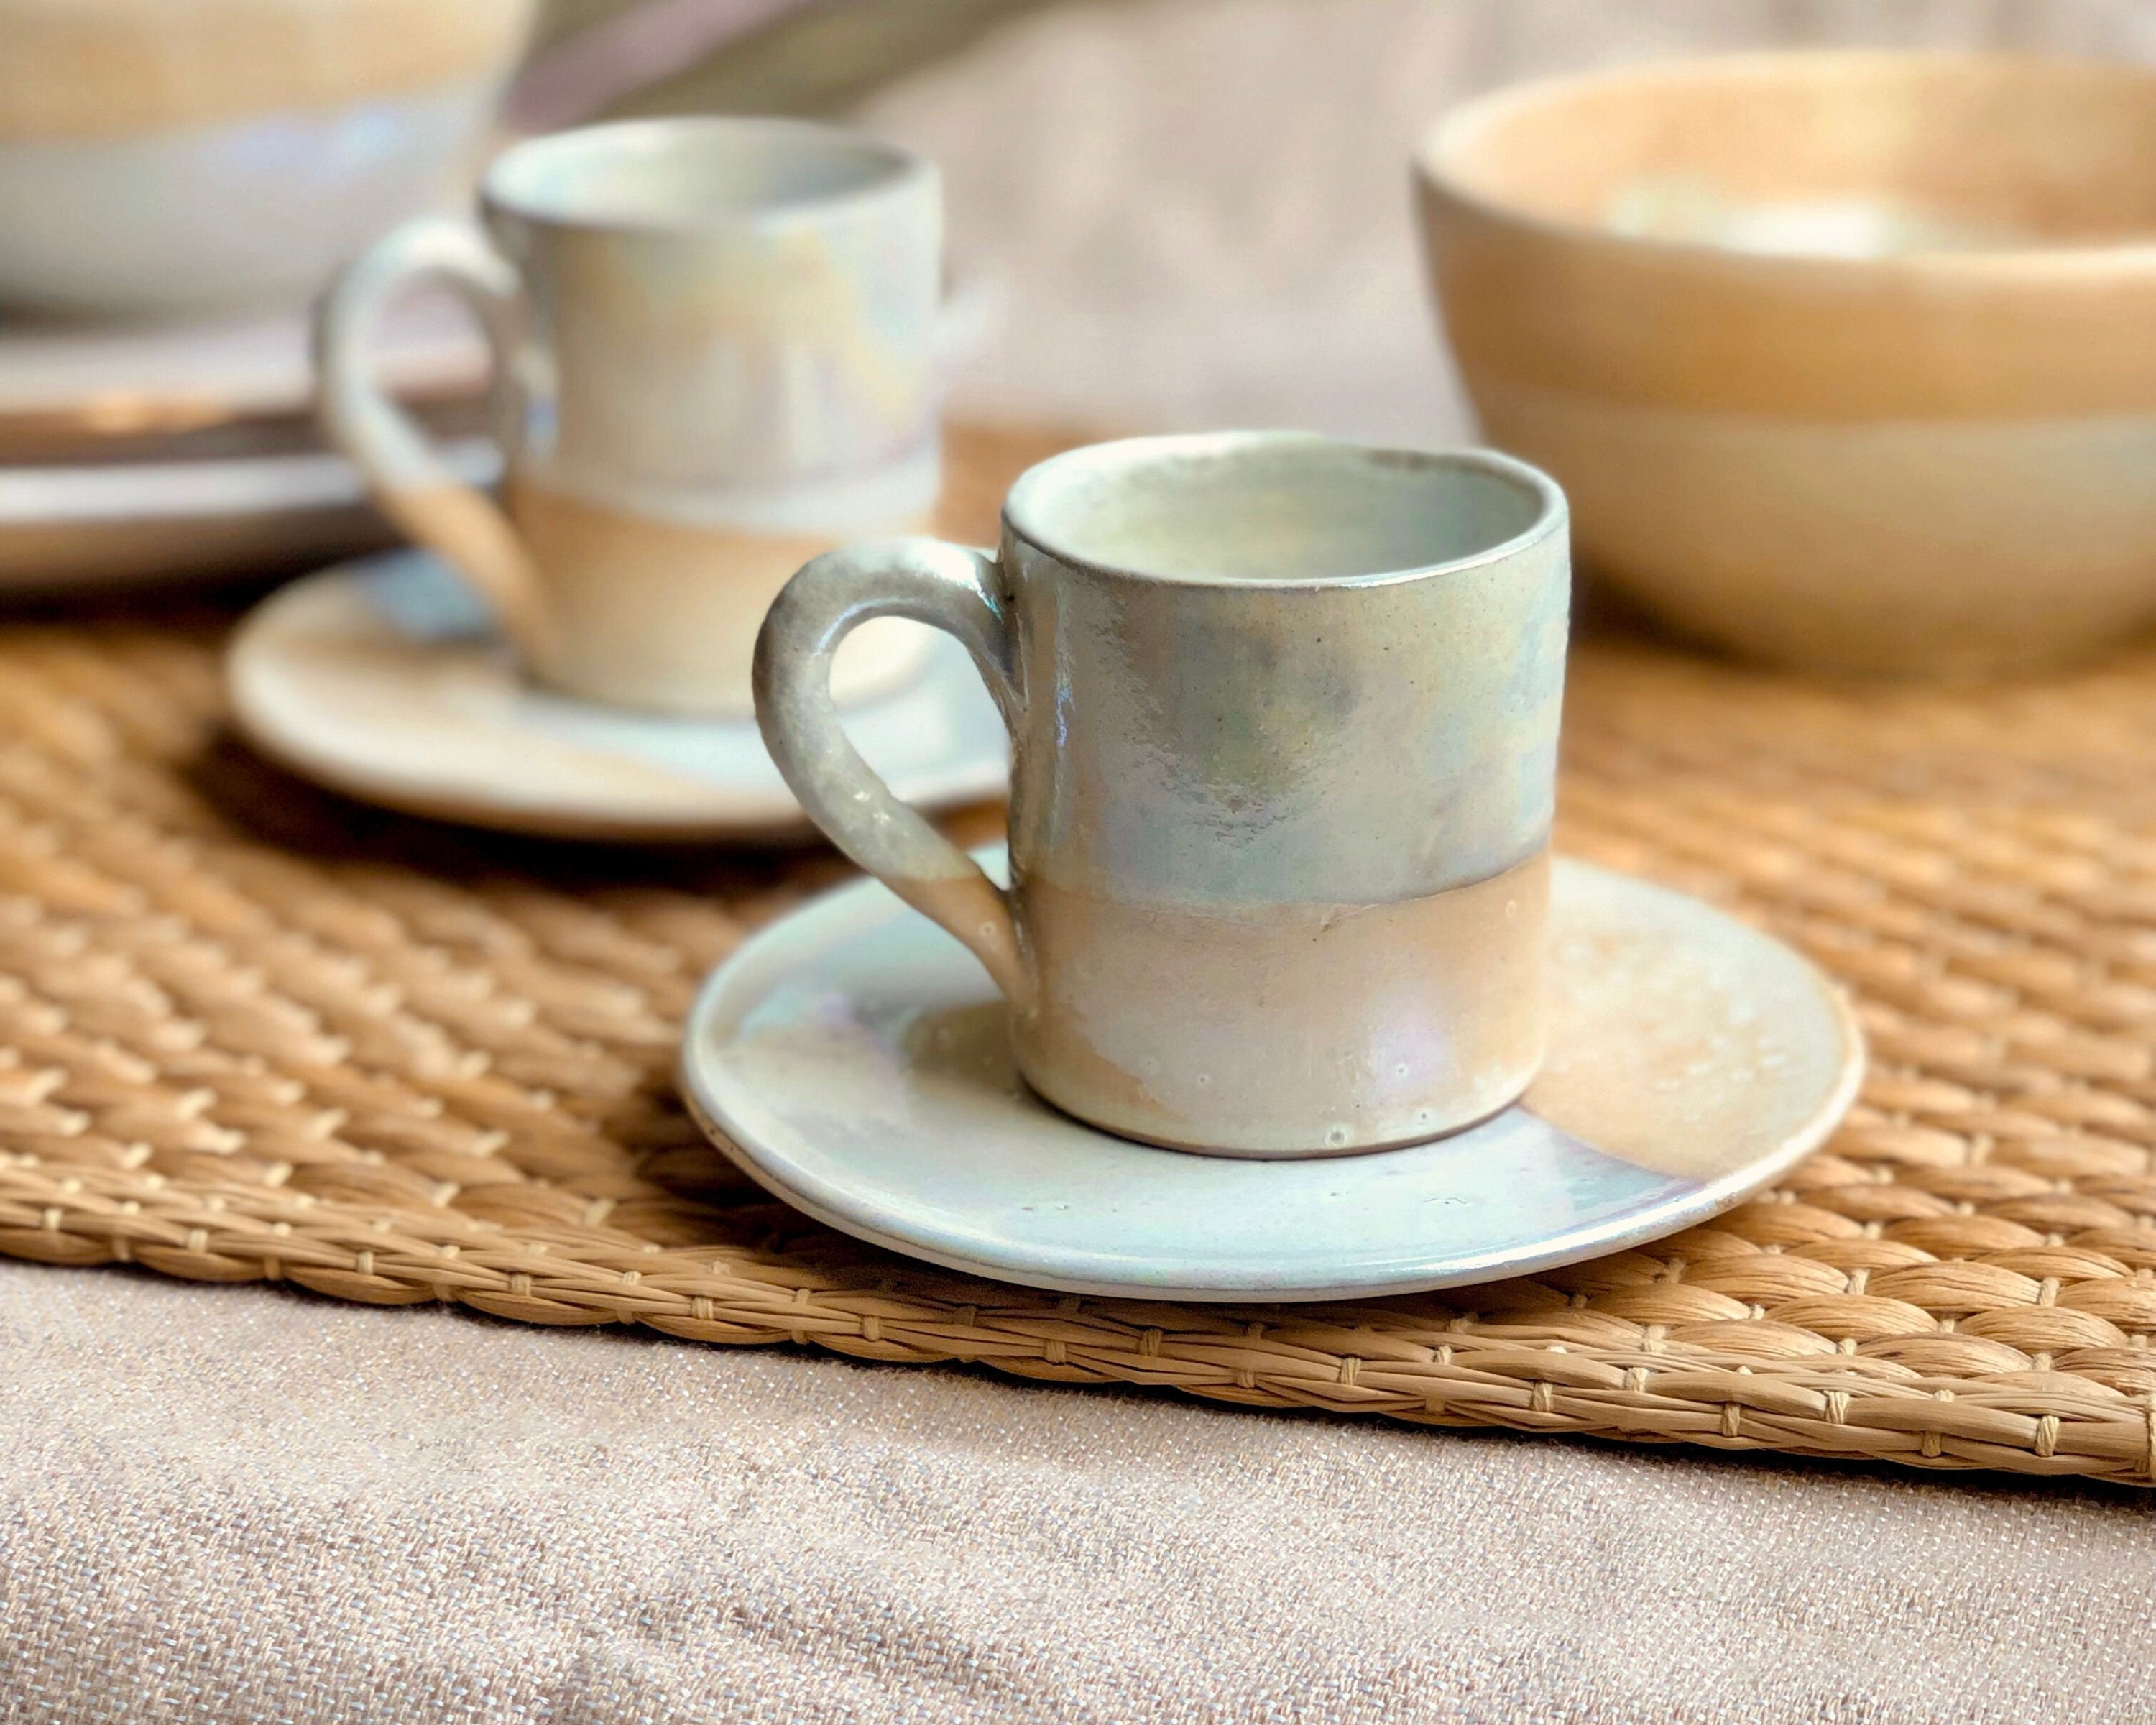 Turkey Espresso Cup And Dish Gold Mini Ceramic Coffee Cups Saucers